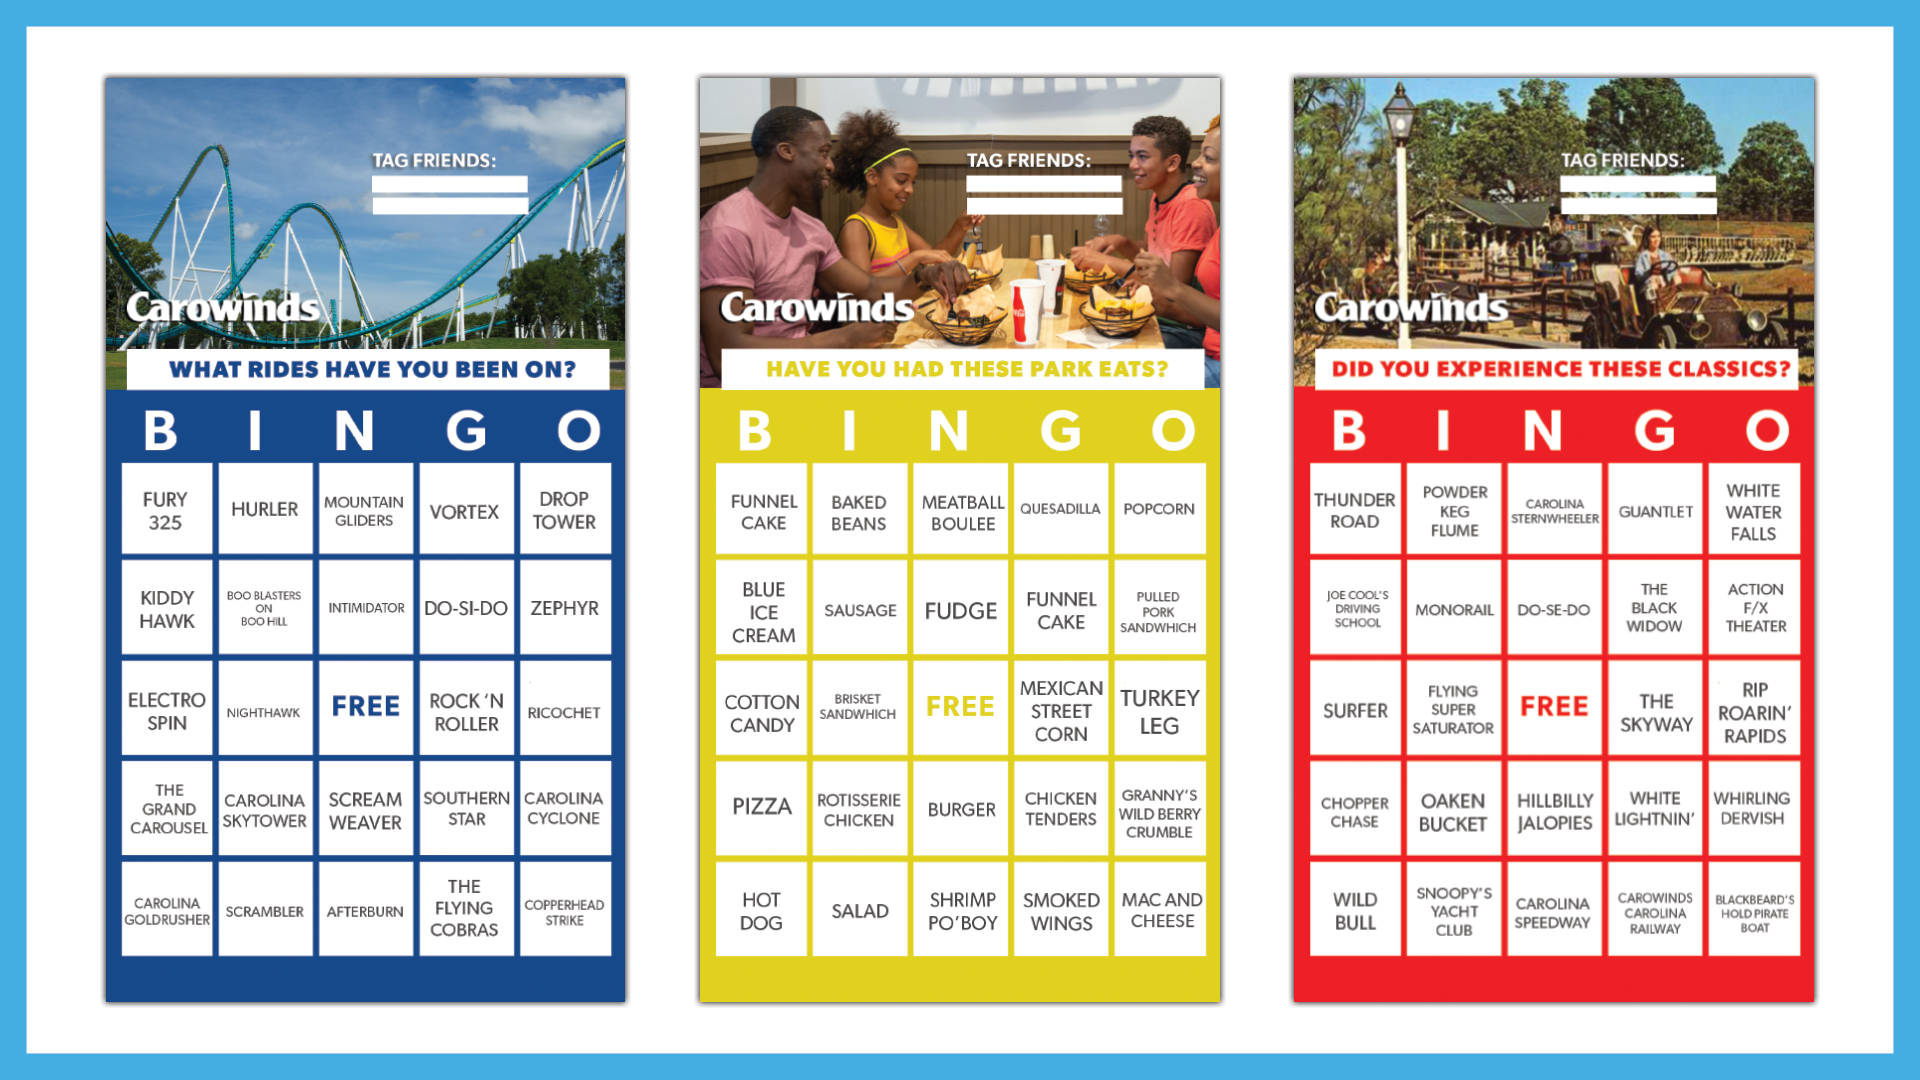 Bingo Night at Carowinds Theme Park Wallpaper